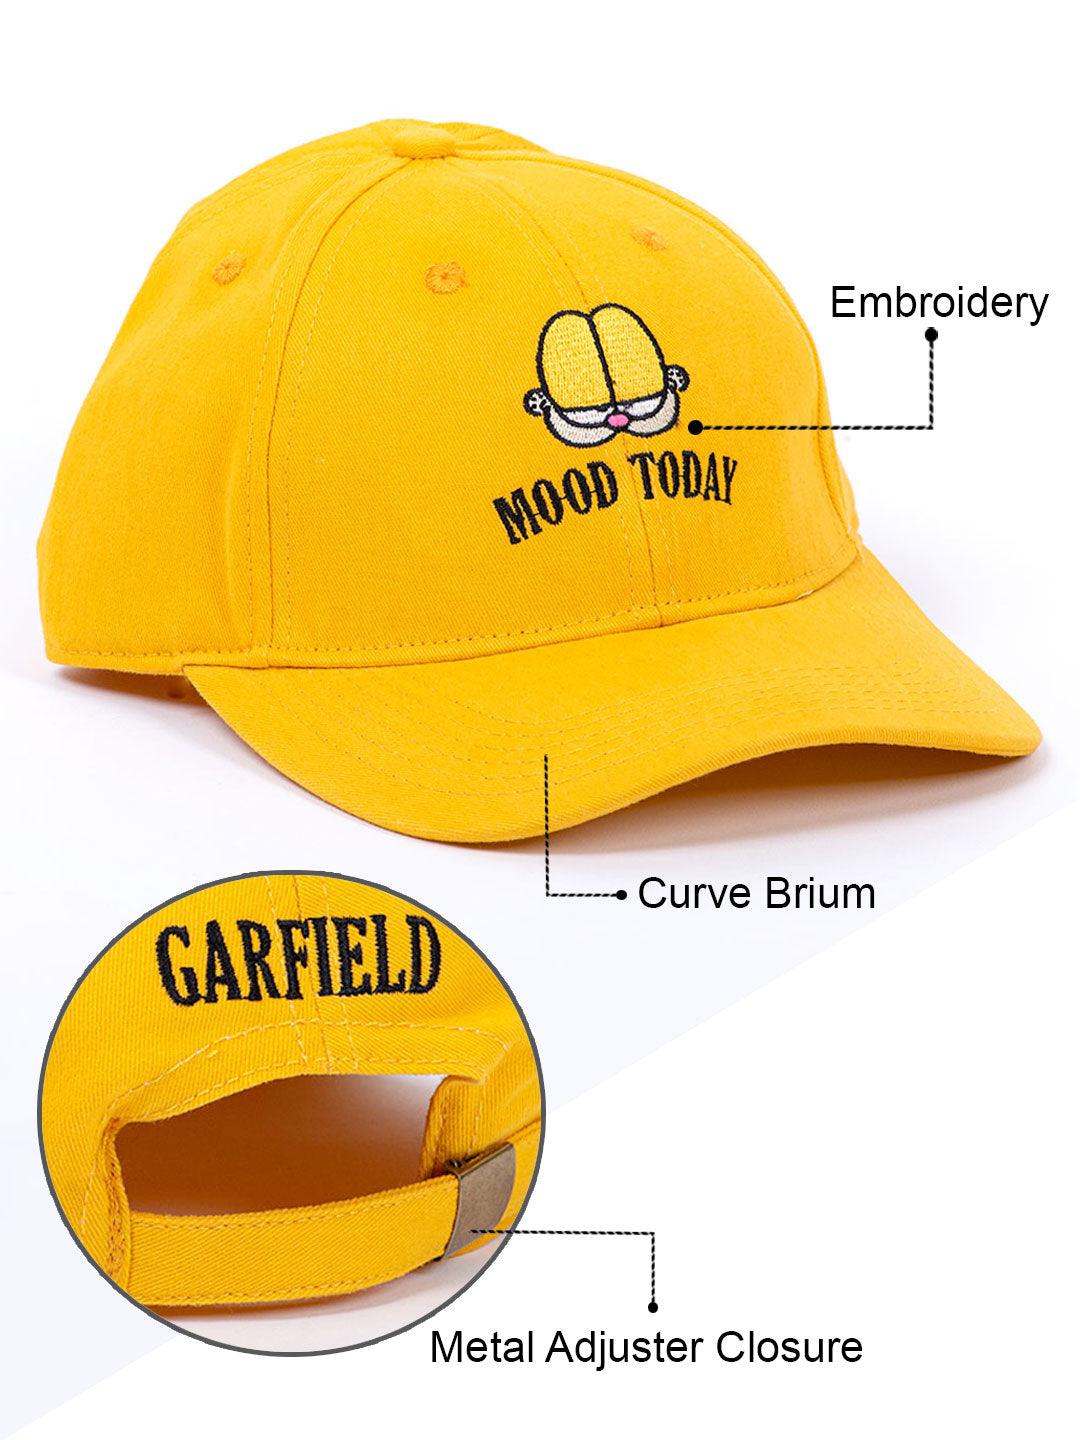 Mood Today Yellow Free Size Unisex Baseball Caps - Tistabene